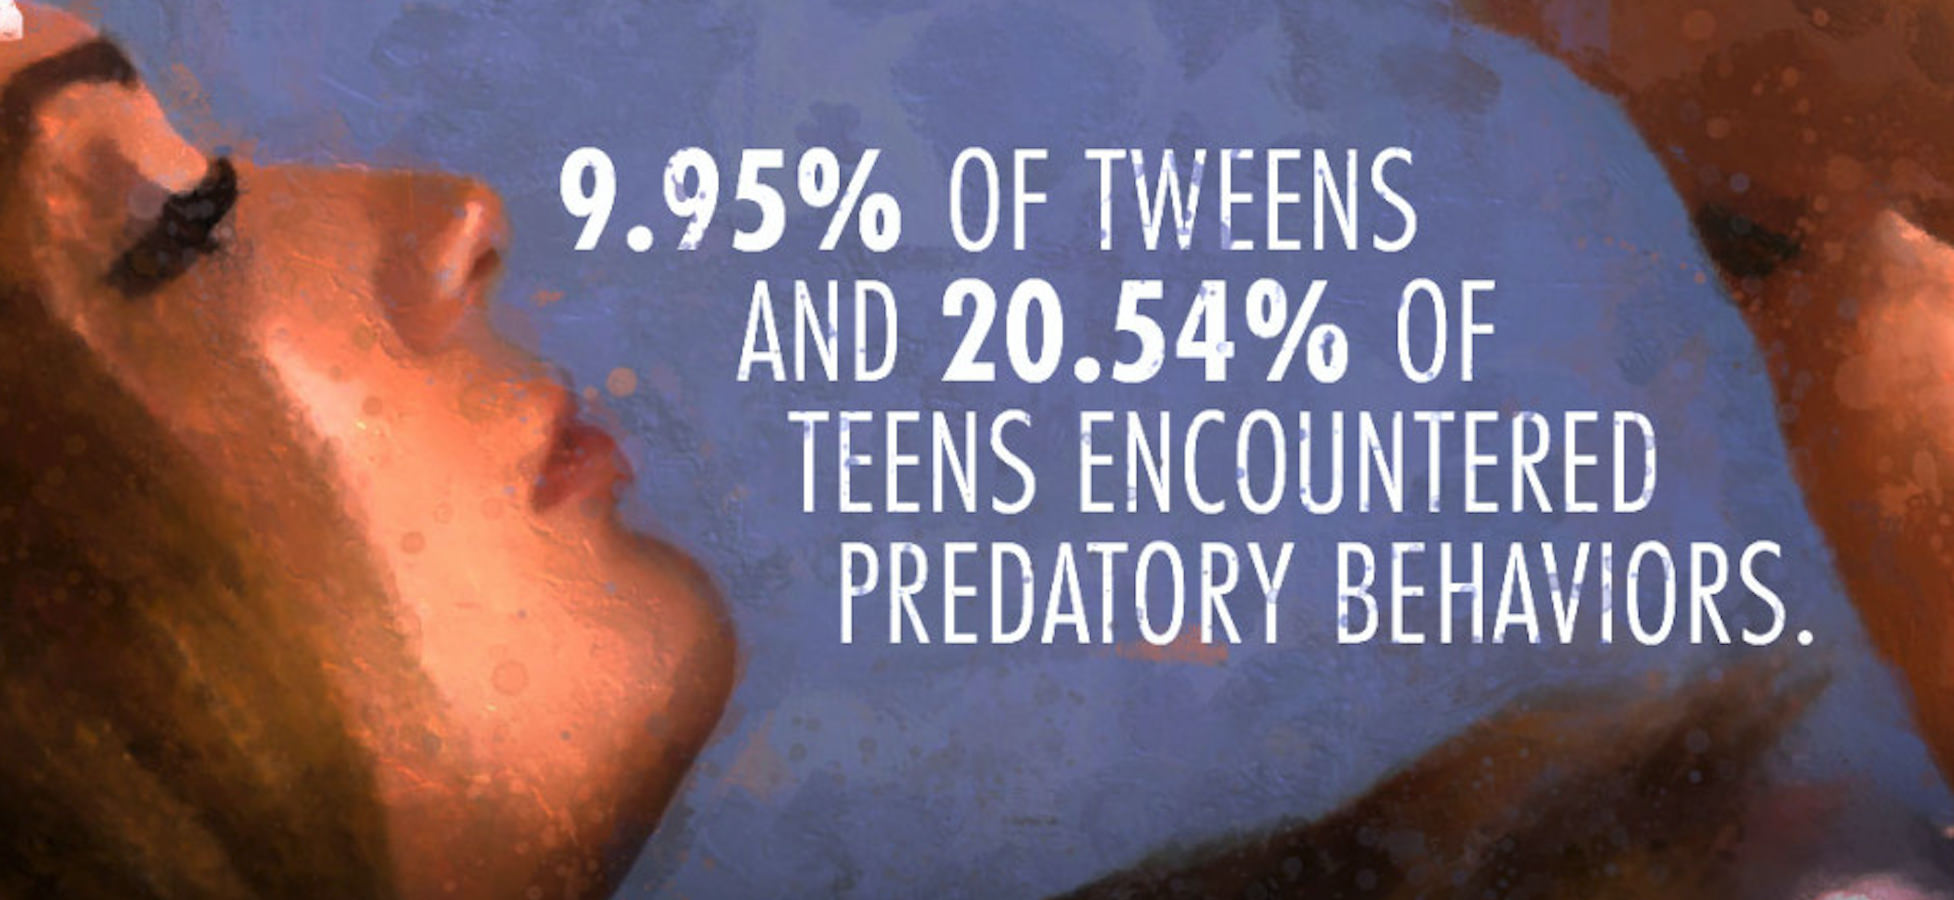 In 2021, according to Bark's annual report, 9.95 % of tweens and 20.54% of teens encountered predatory behavior on social media platforms